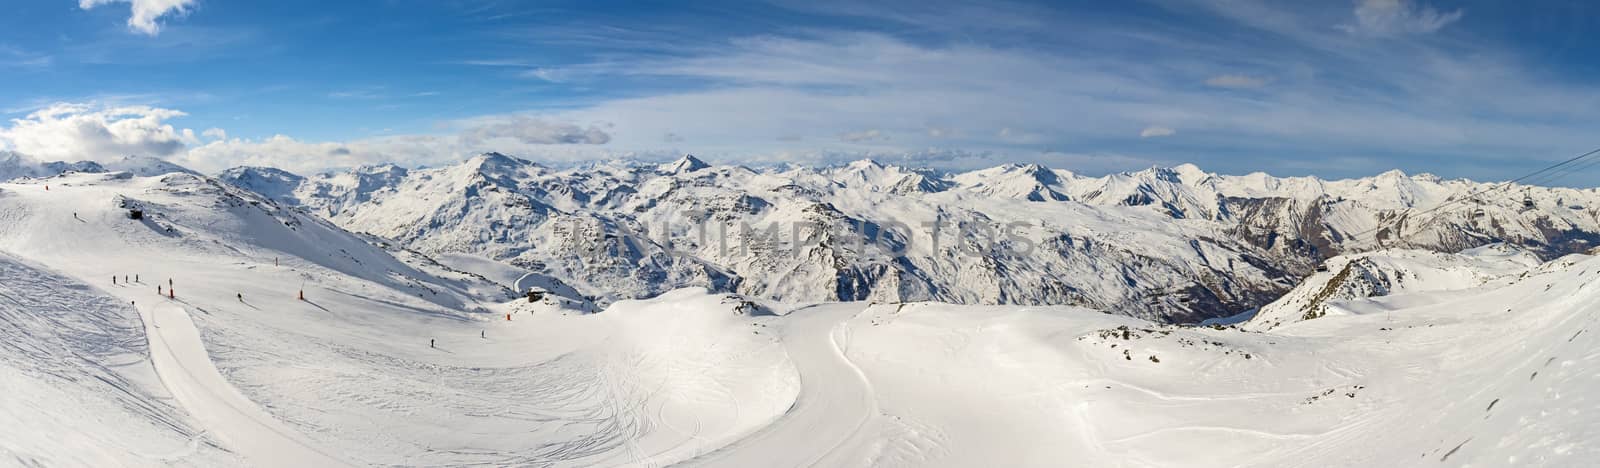 Ski slope piste in winter alpine resort with european alps mountain range in background